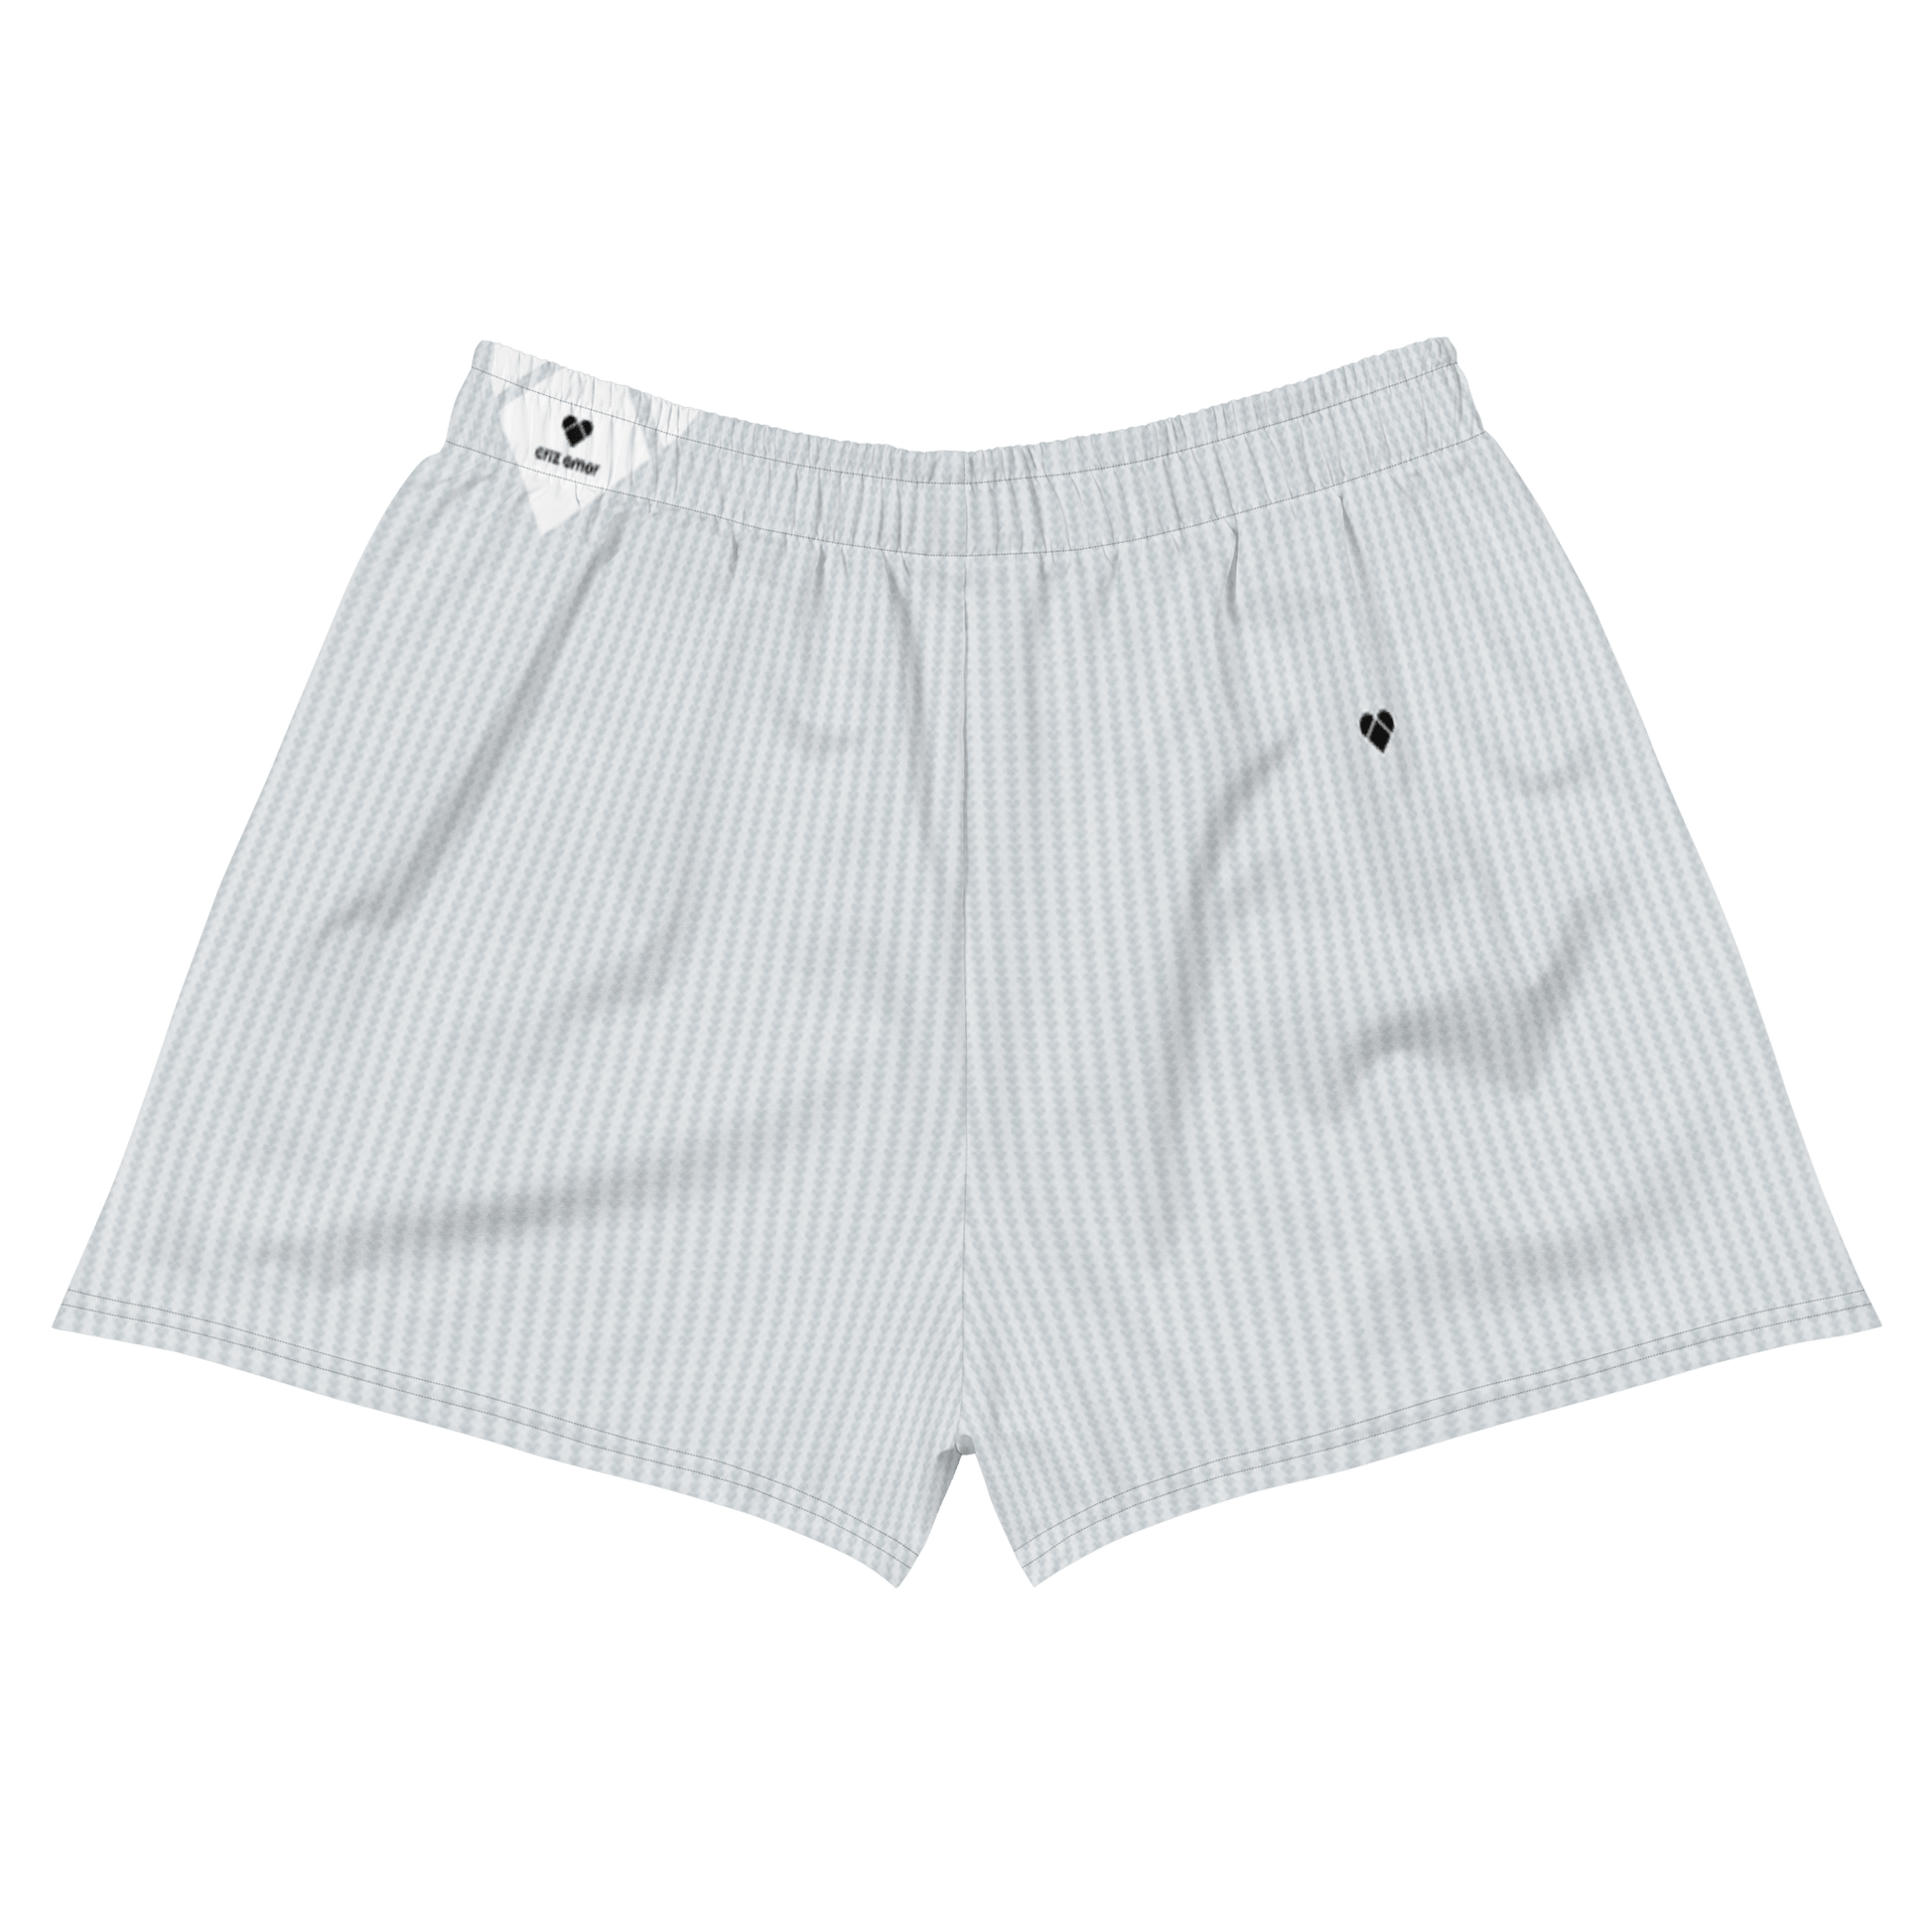 CRiZ AMOR's Amor Primero Collection: Sustainable Sport Shorts